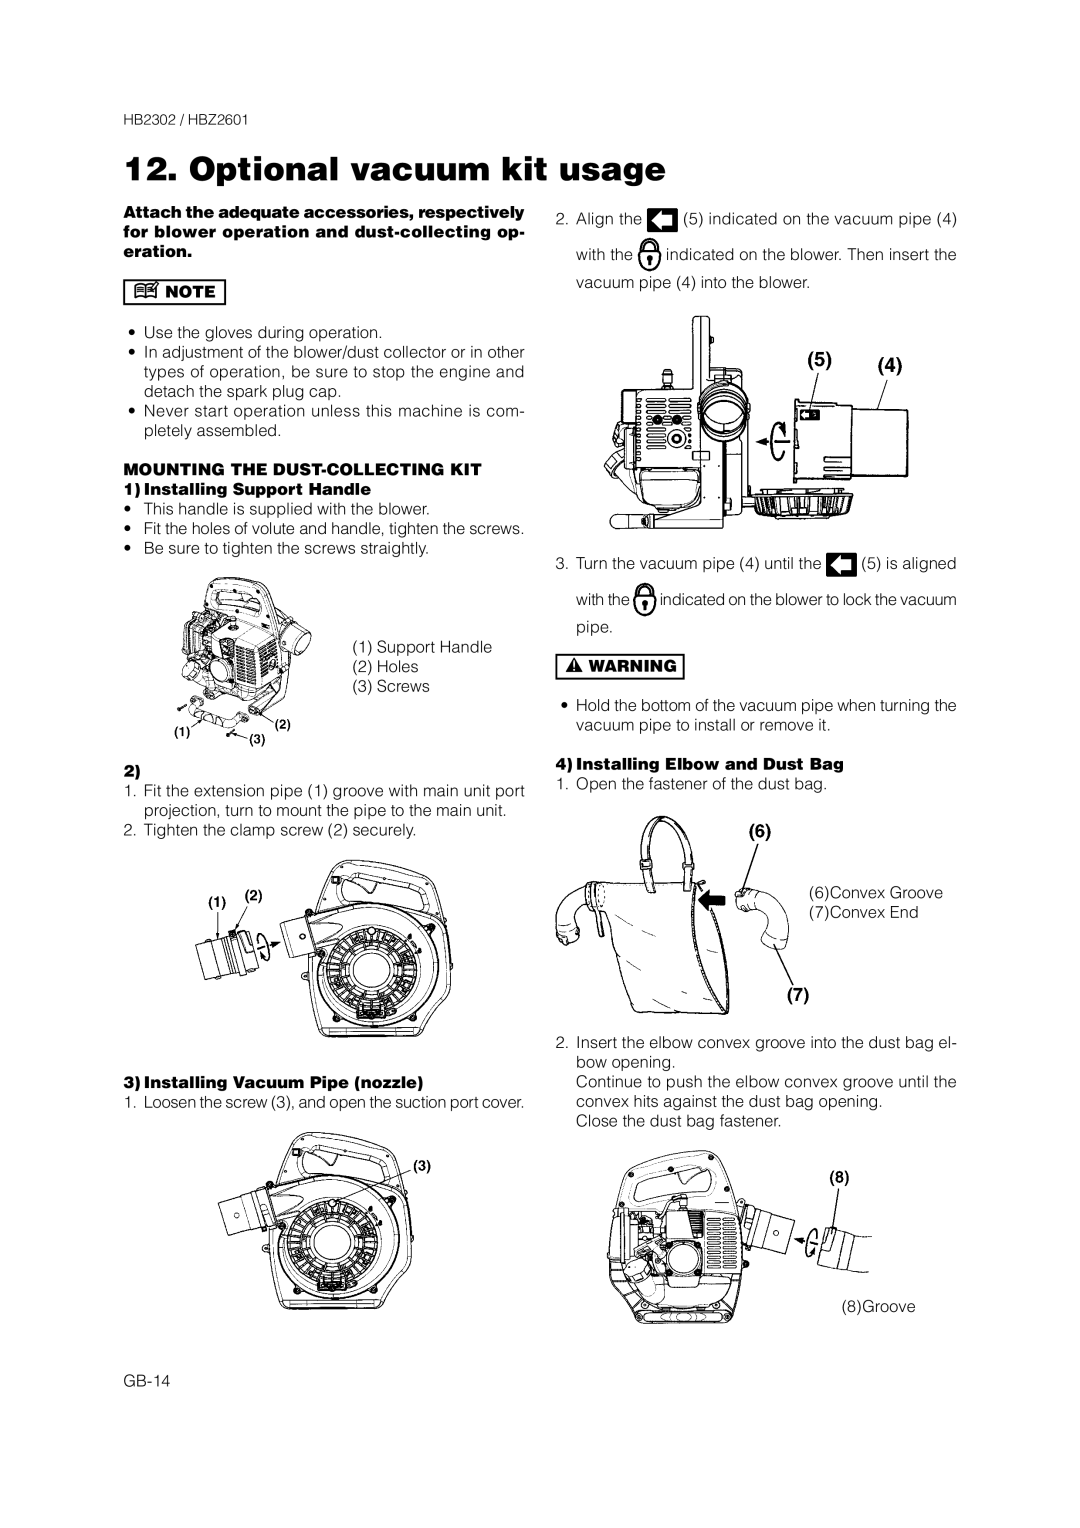 Zenoah HBZ2601 owner manual Optional vacuum kit usage, Installing Vacuum Pipe nozzle, 4Installing Elbow and Dust Bag 